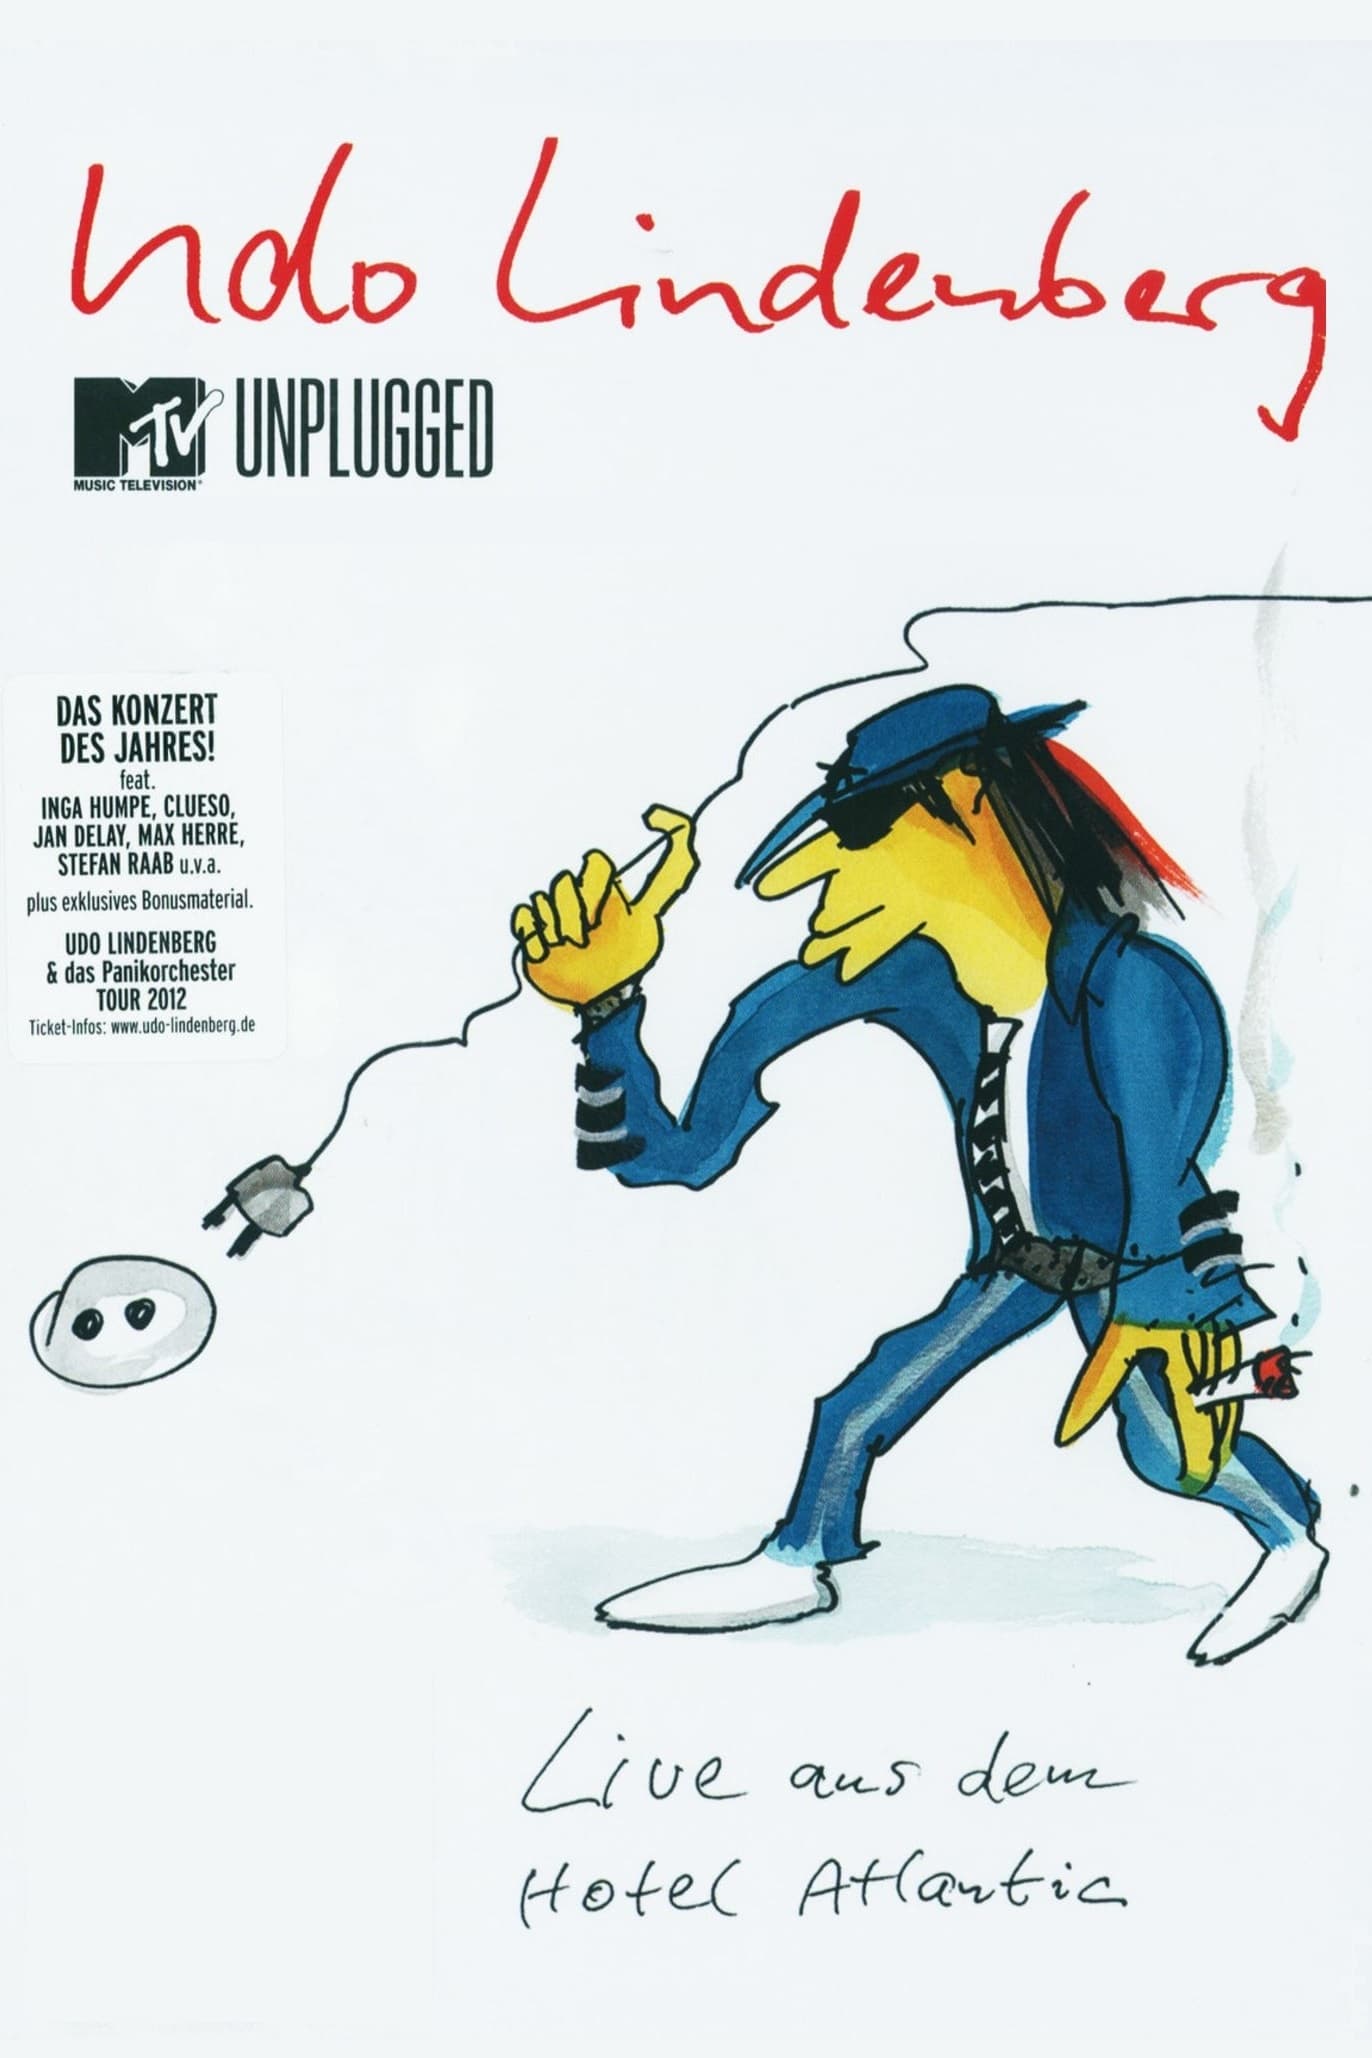 Udo Lindenberg: MTV Unplugged Live  aus dem Hotel Atlantic